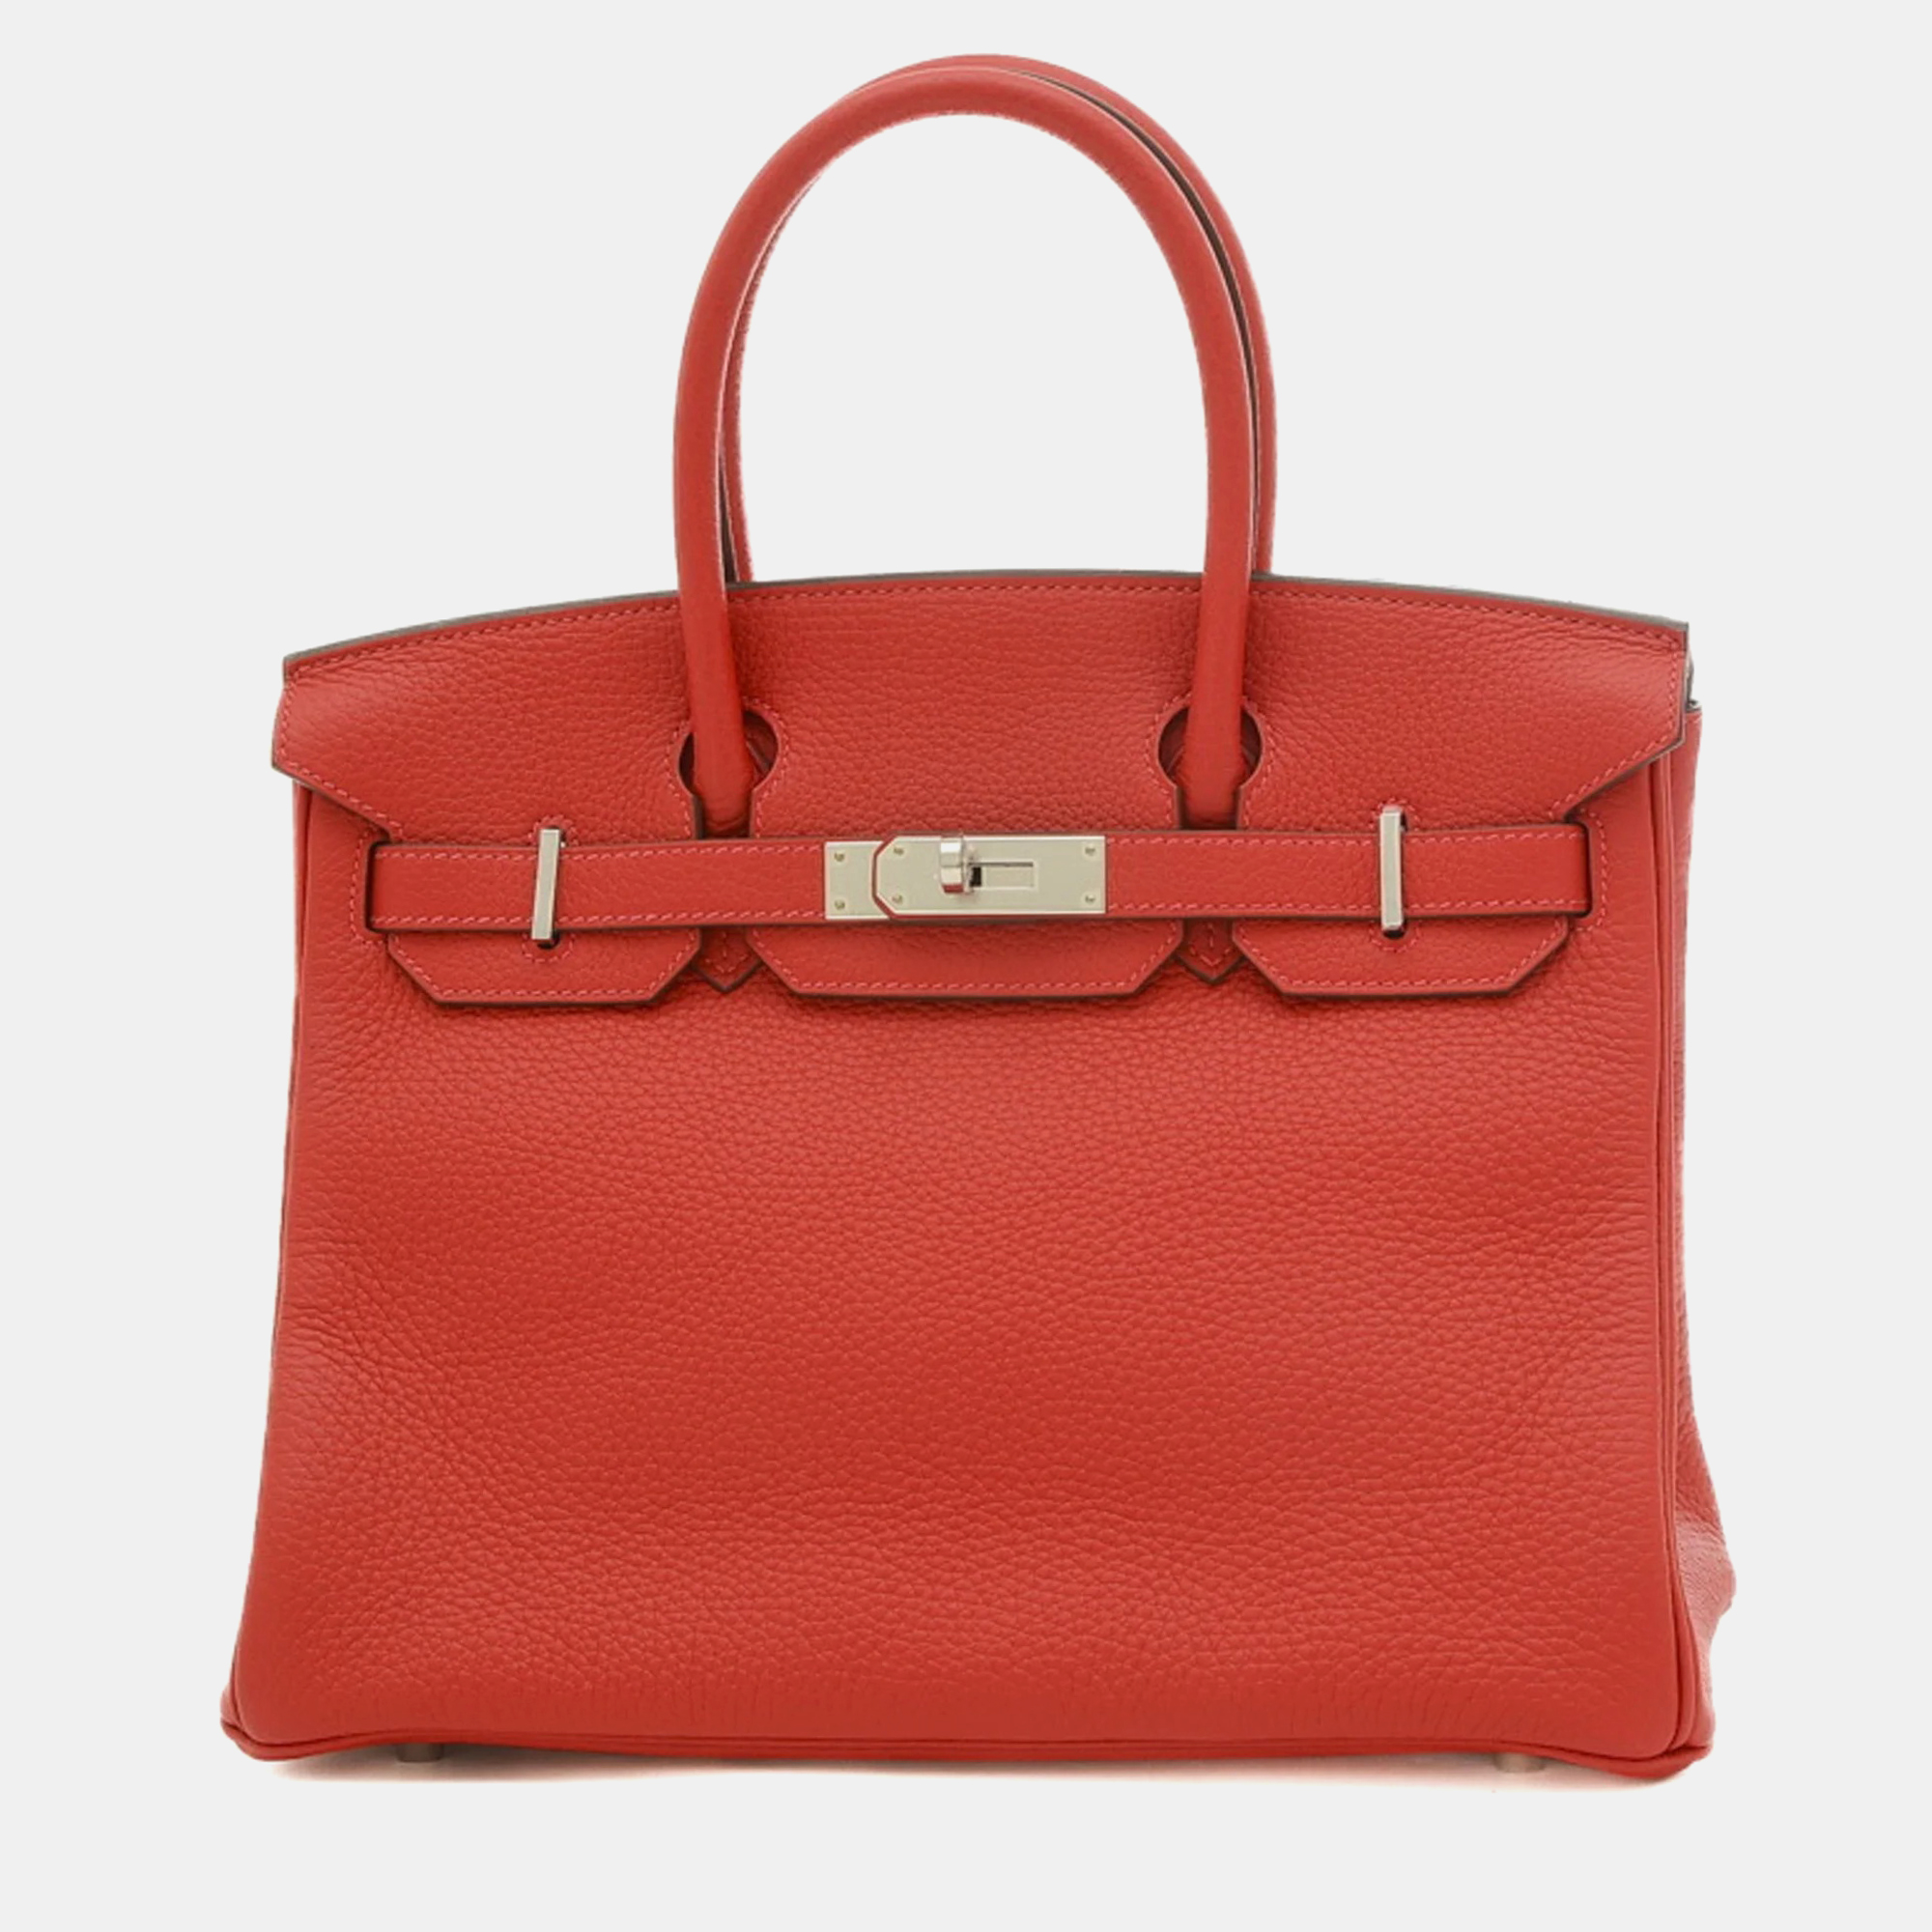 Hermes rouge kazak togo birkin 30 handbag